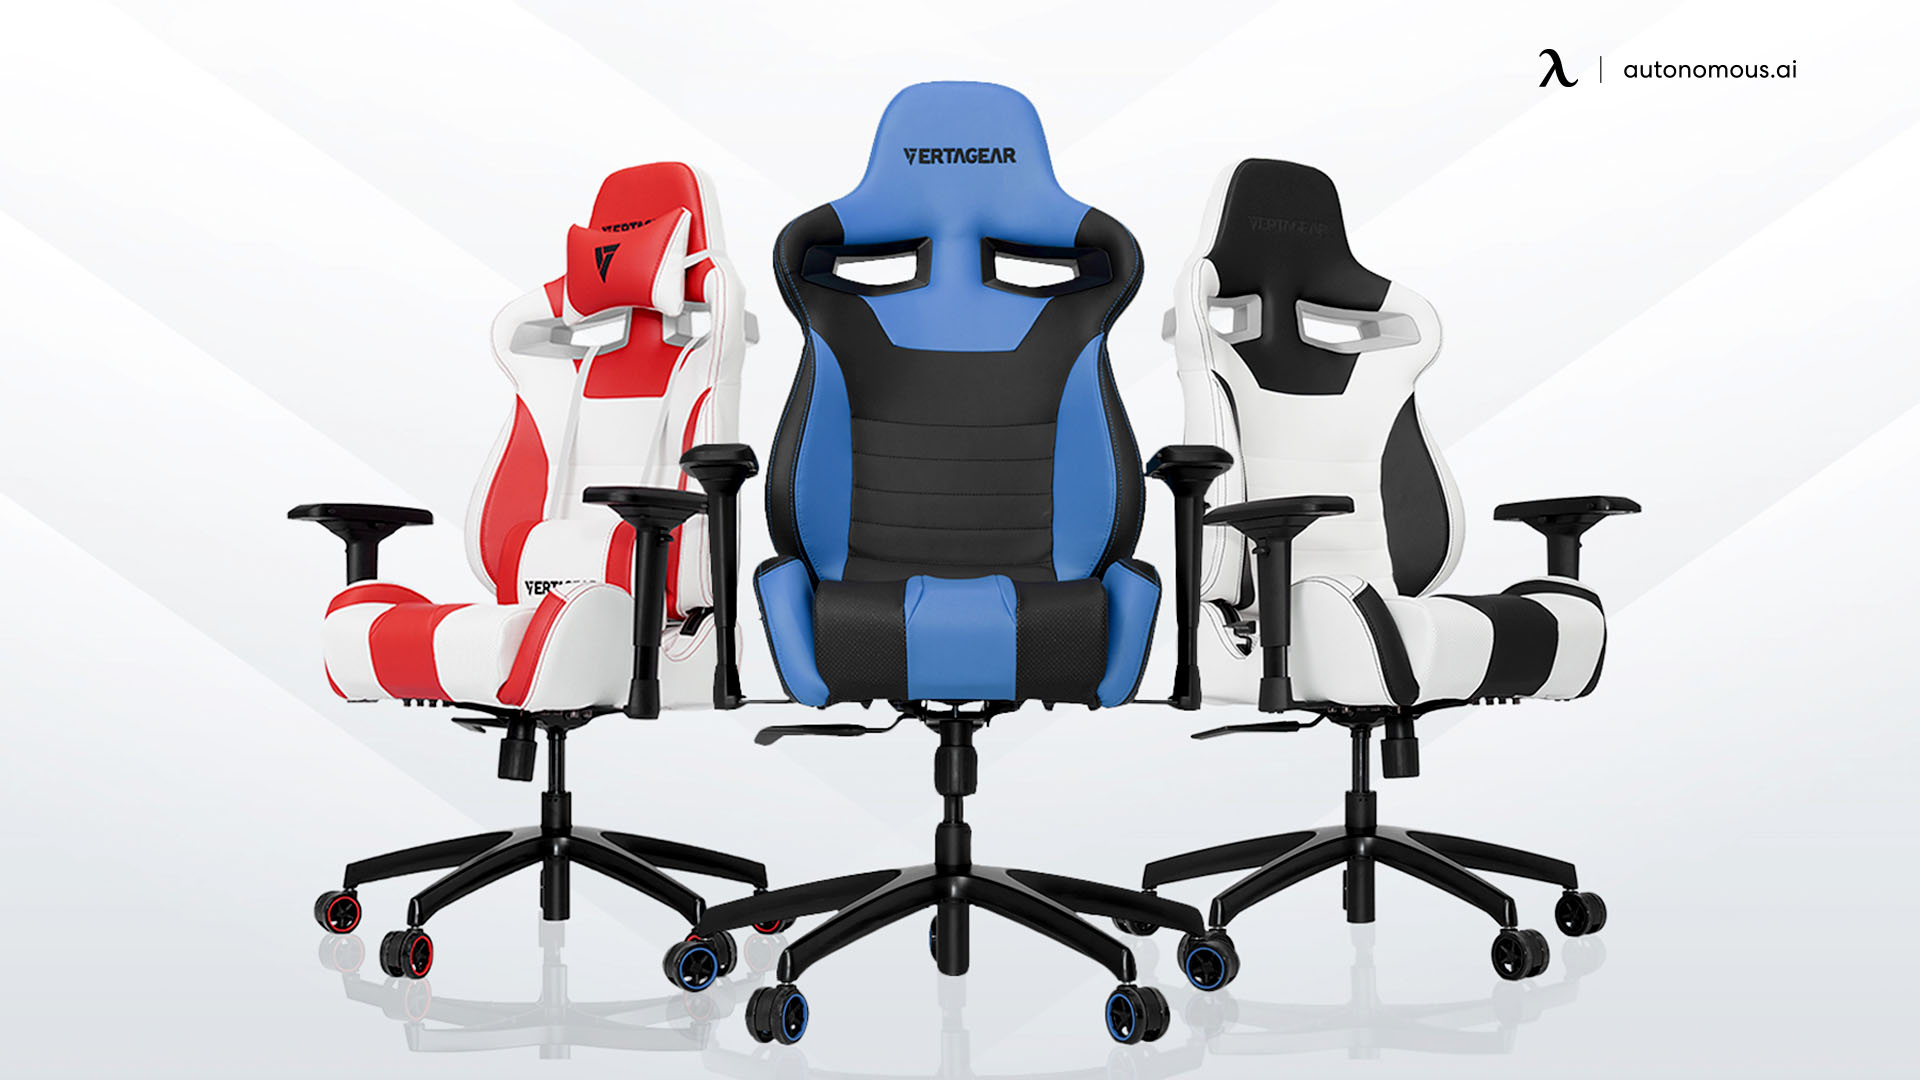 Vertagear SL4000 ergonomic gaming chair